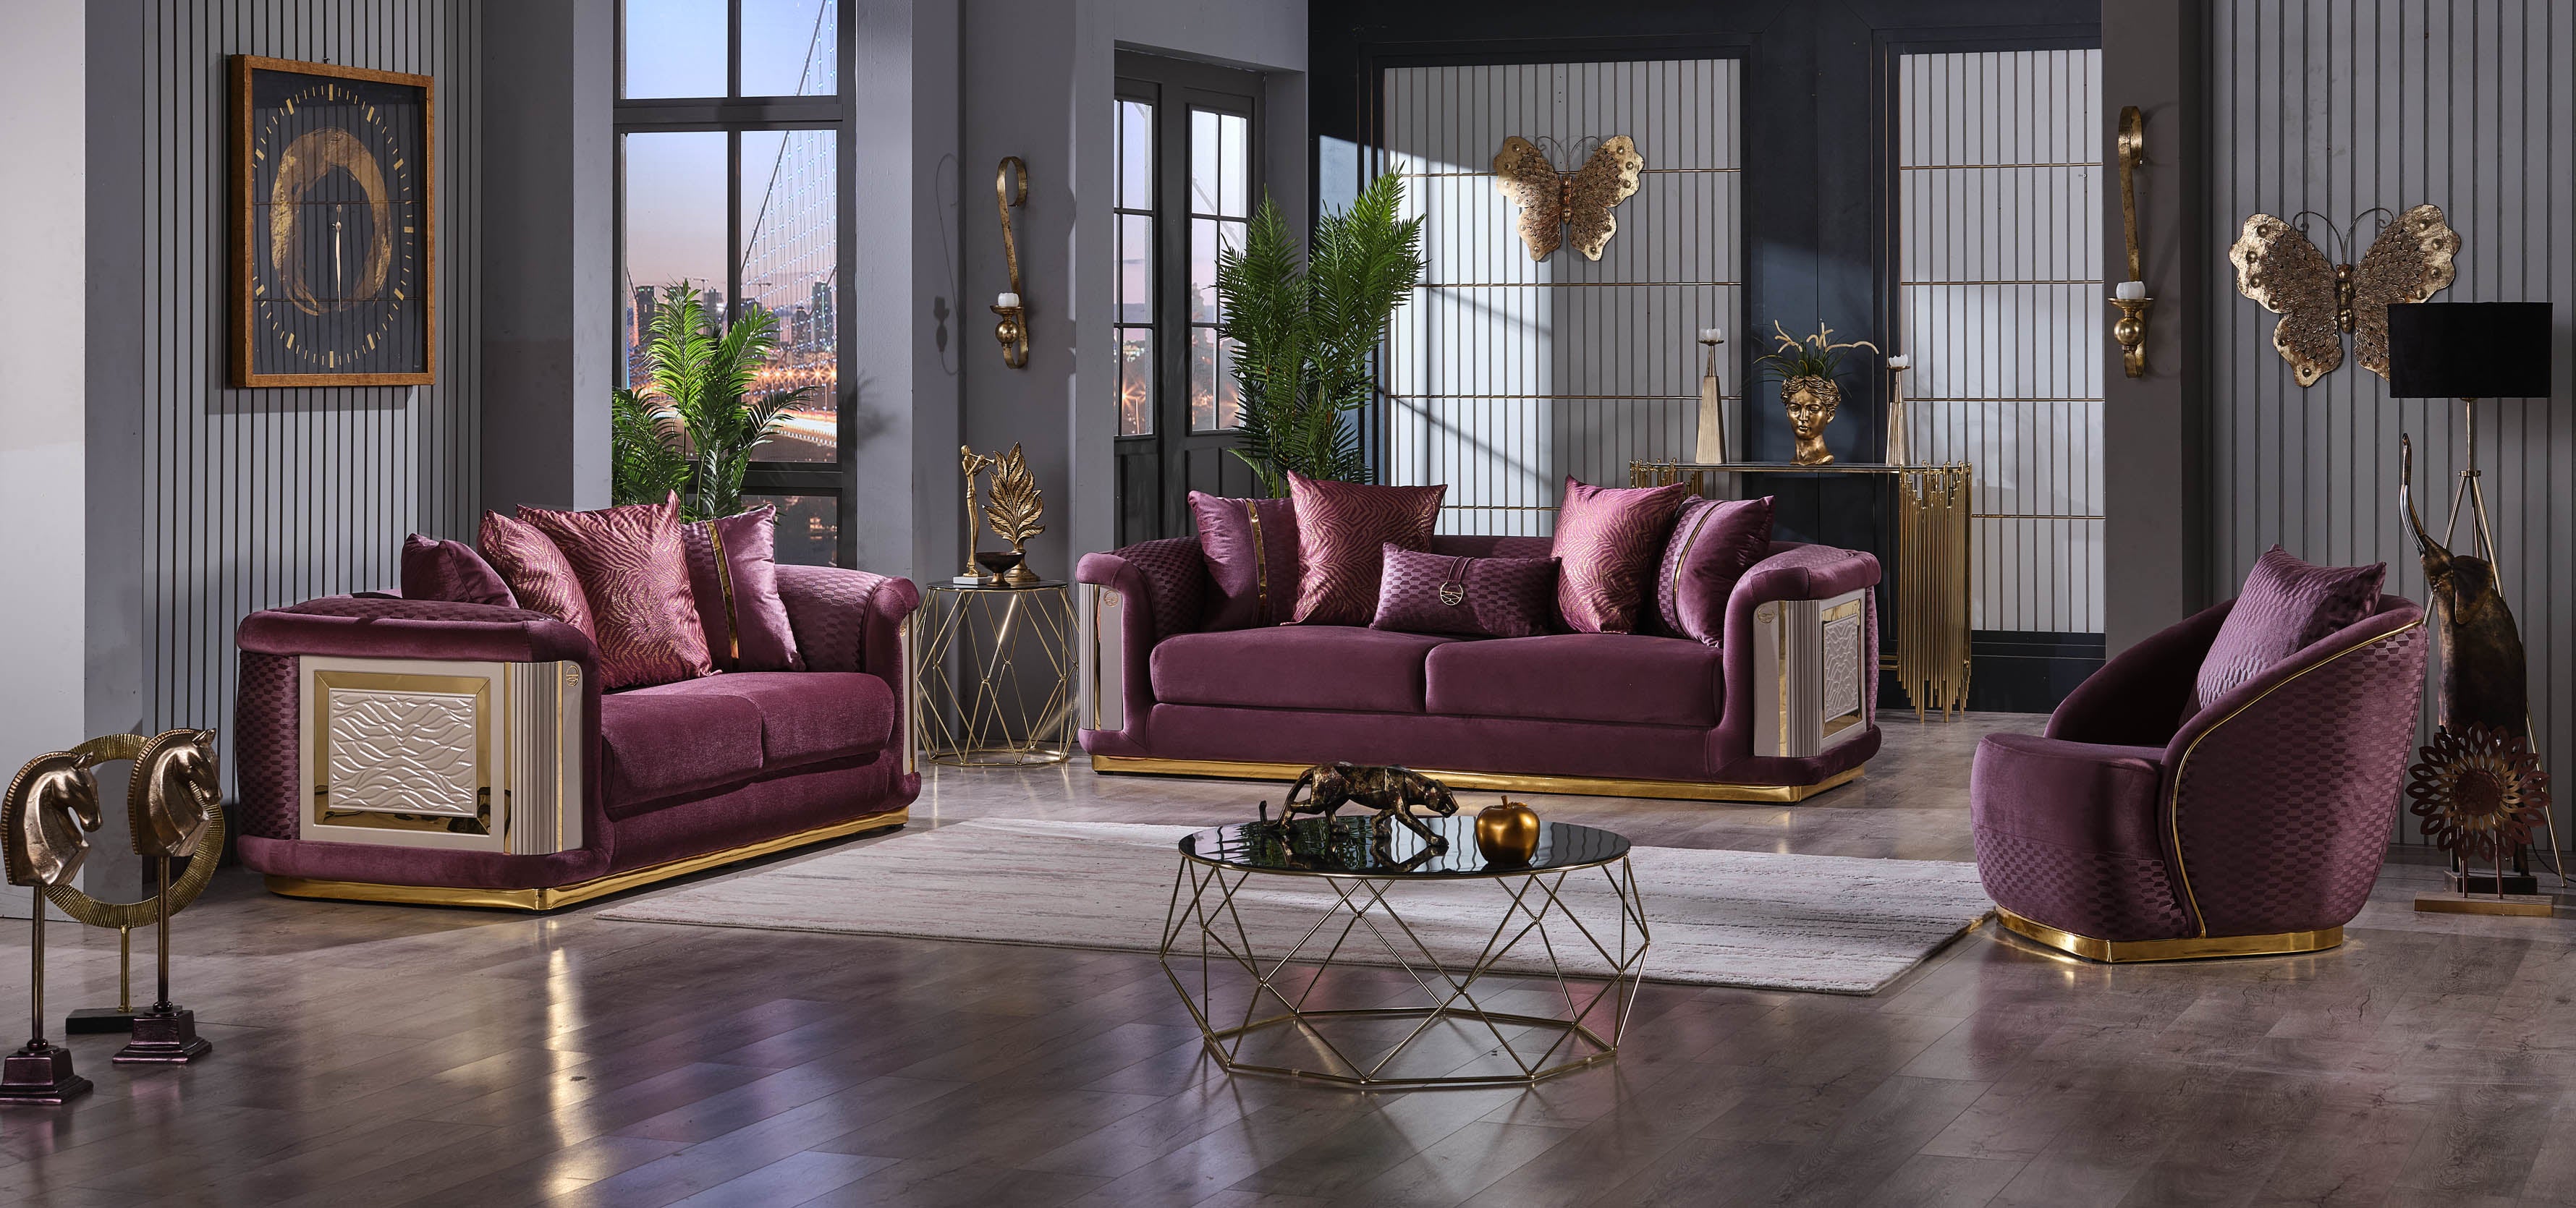 Elegance Stationary Livingroom (2 Sofa & 2 Chair) Purple